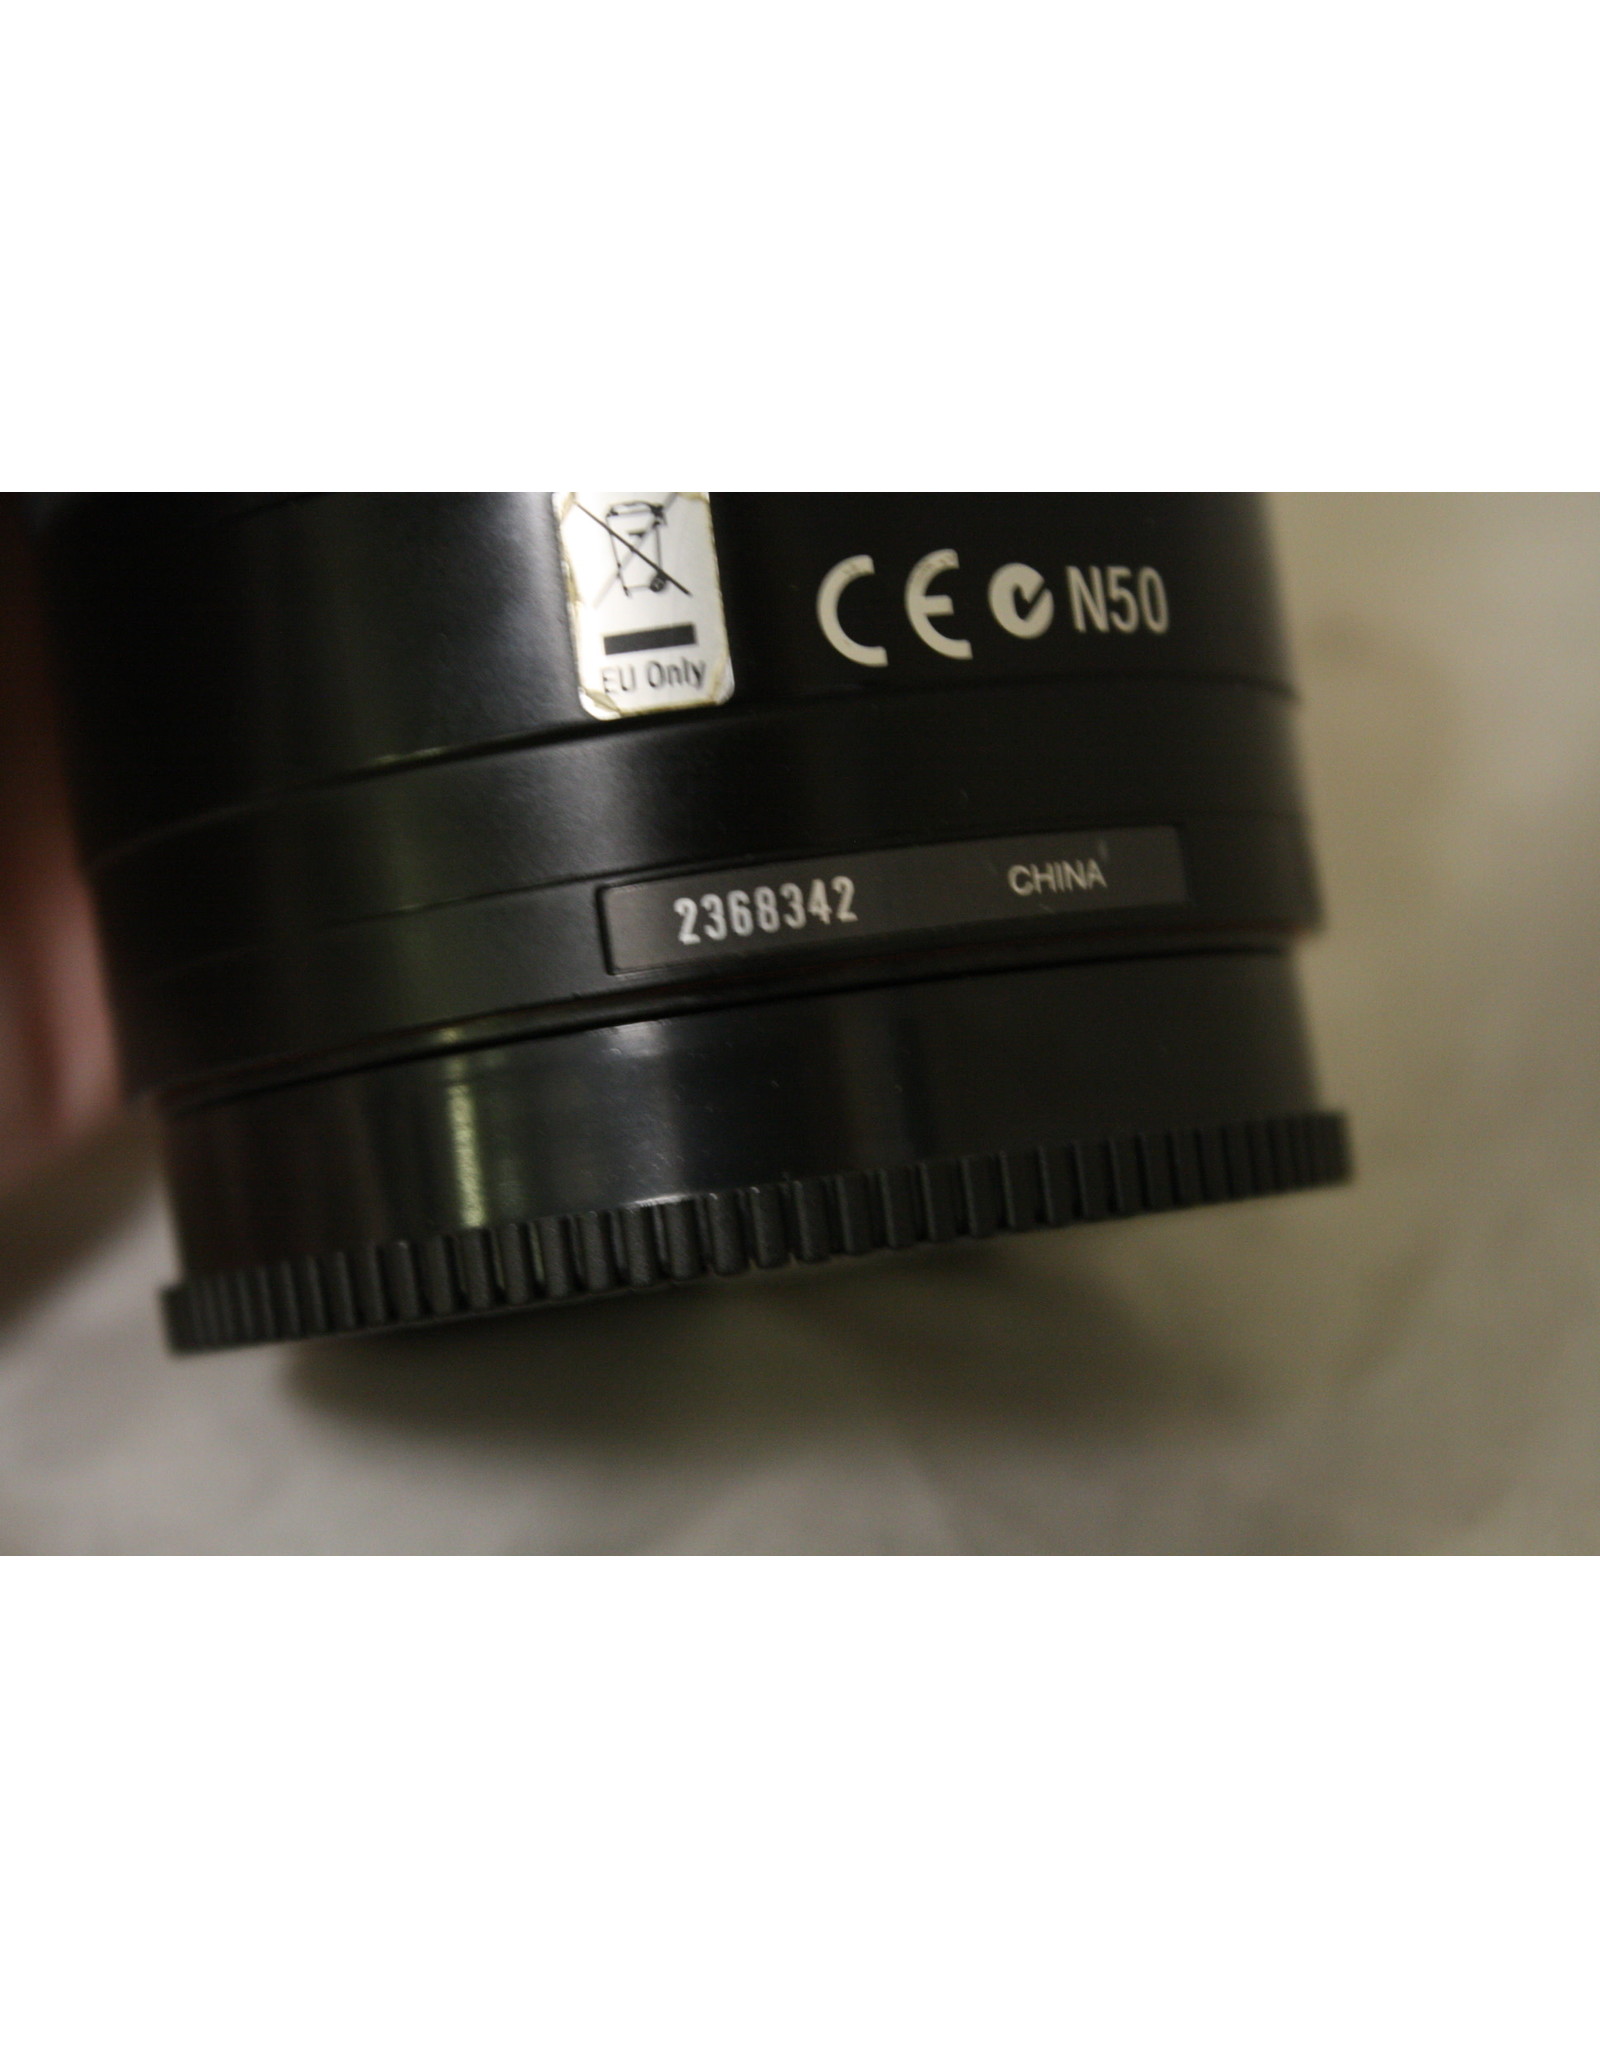 Sony 18-70mm f/3.5-5.6 AF DT Standard Zoom Lens SAL-1870 with SH0006 Hood (Pre-owned)